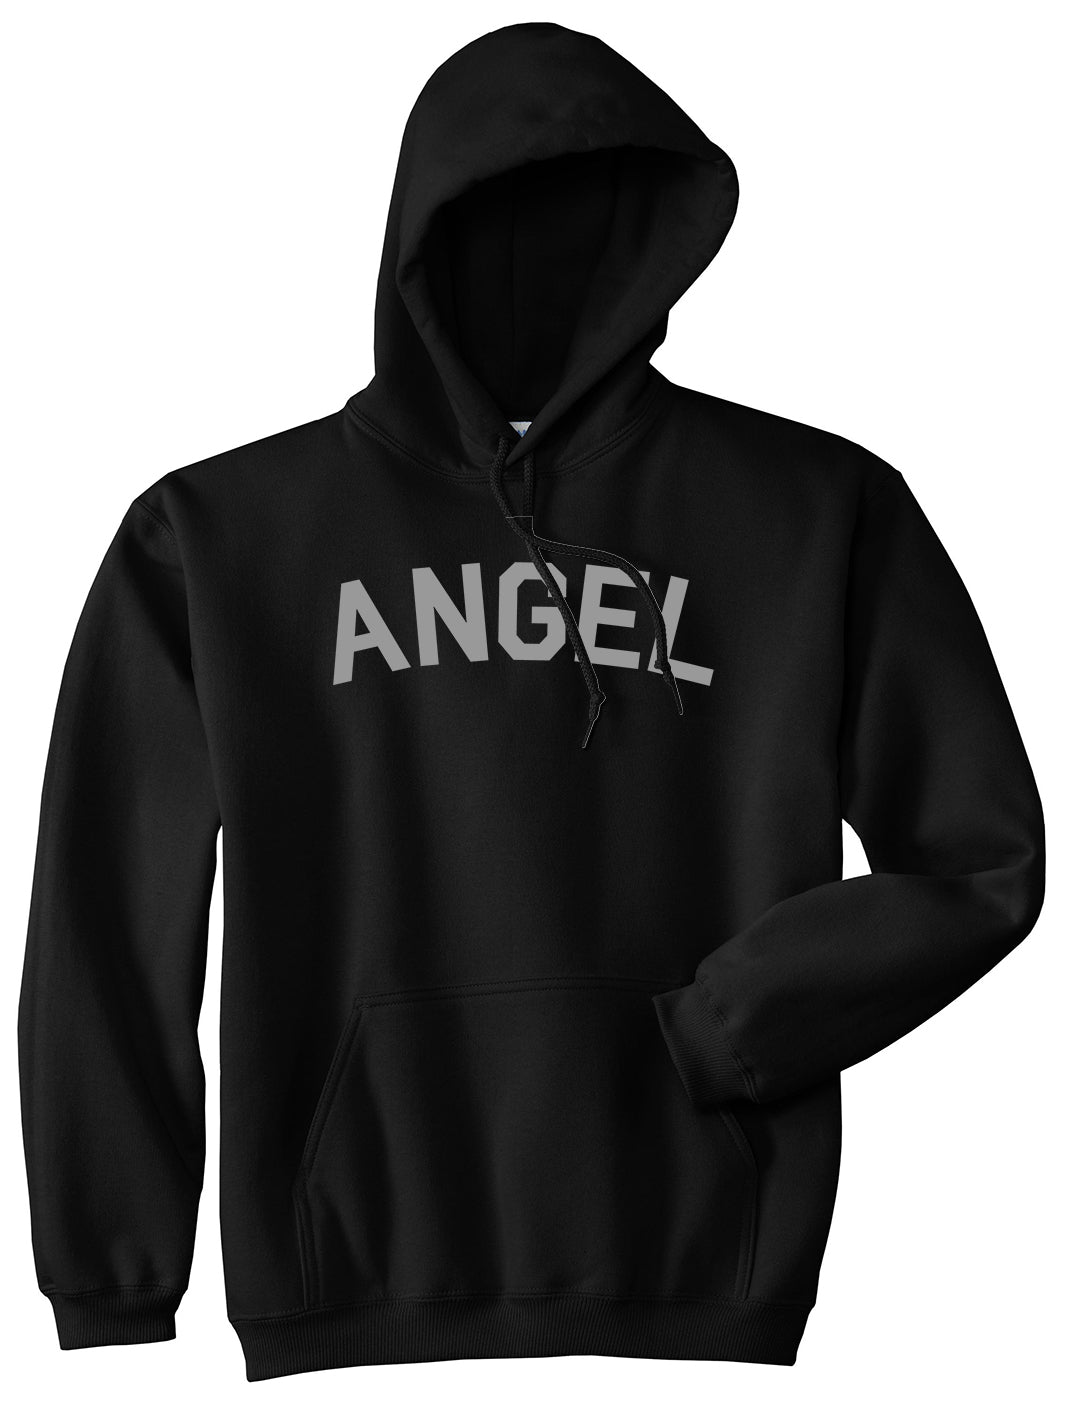 Angel Arch Good Pullover Hoodie in Black